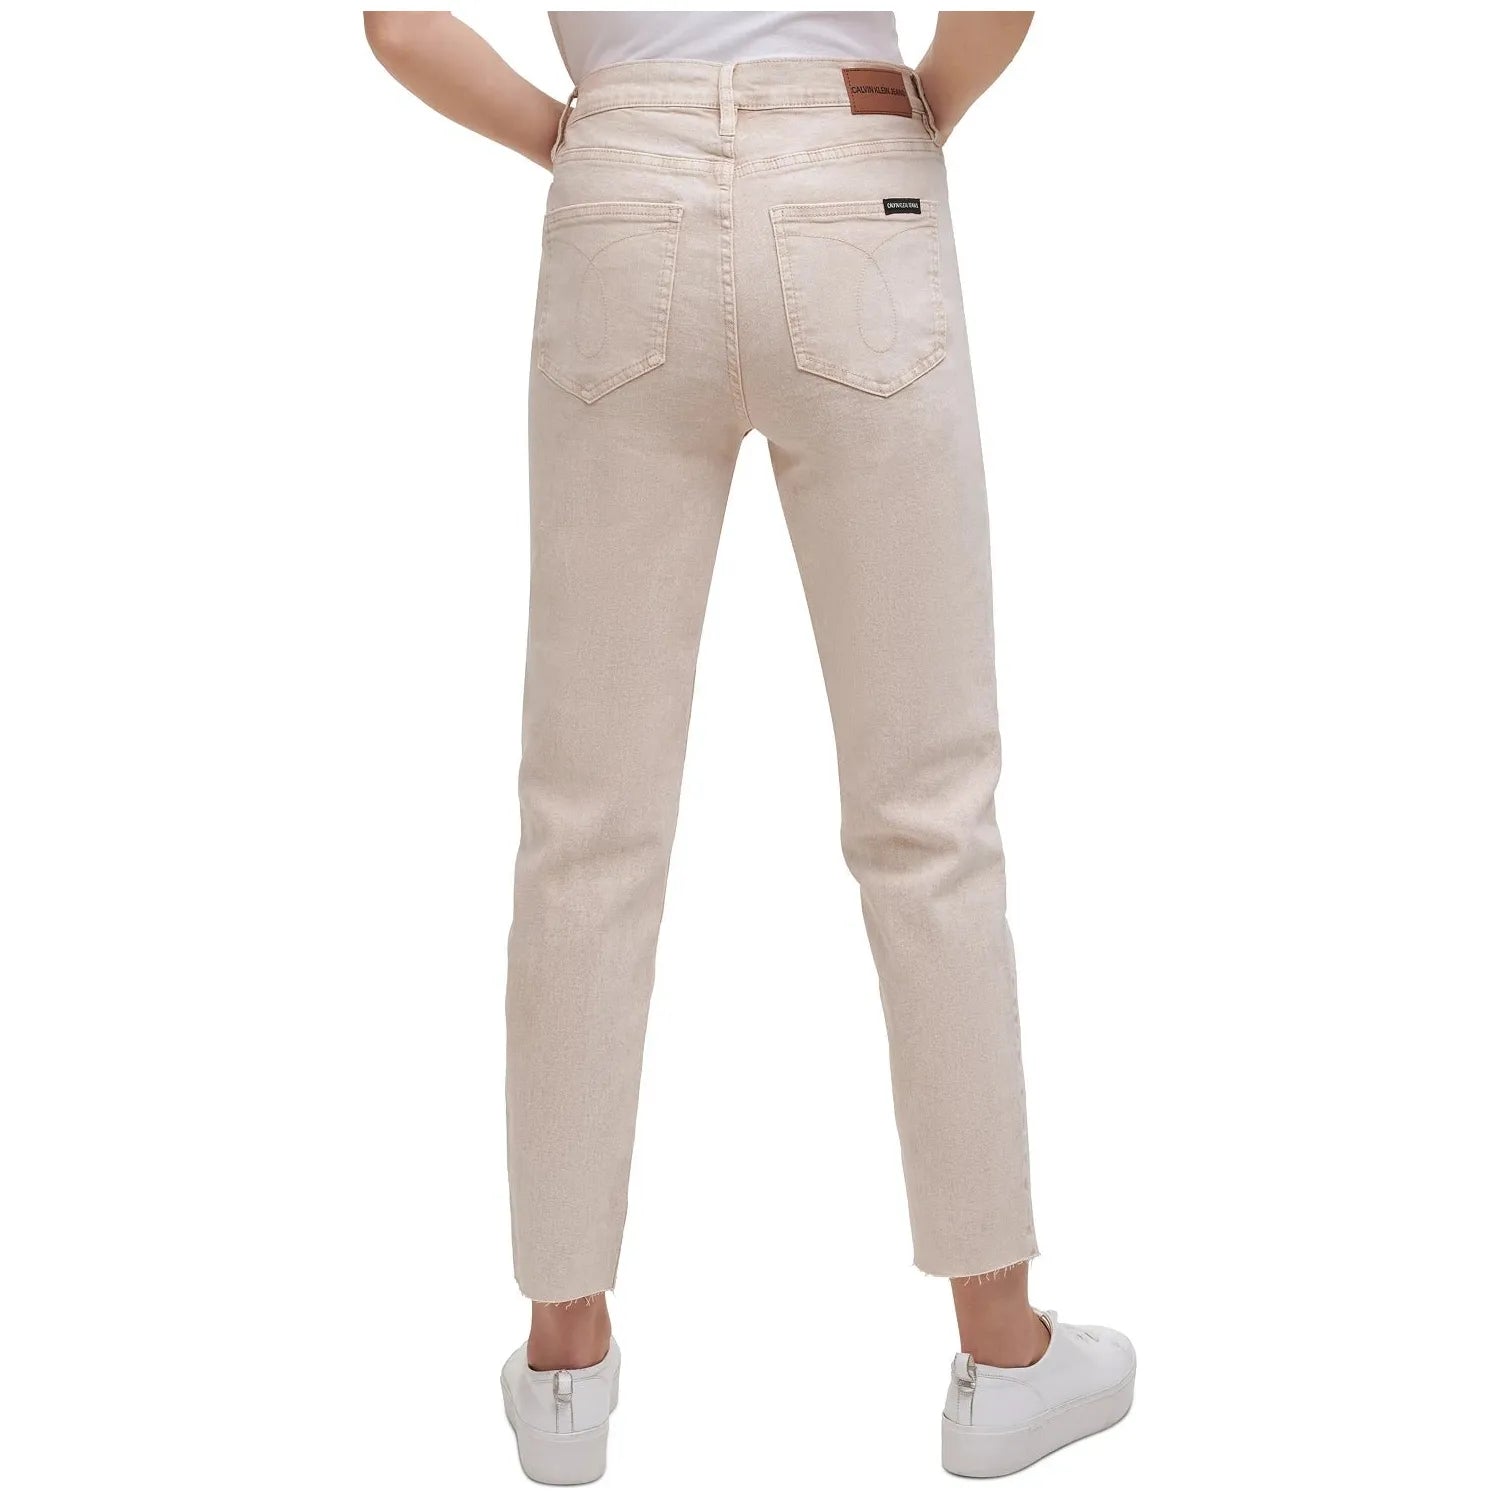 Calvin Klein-Calvin Klein Jeans High-Rise Skinny Ankle Jeans , Tan/Beige, Size: 32 - Brandat Outlet